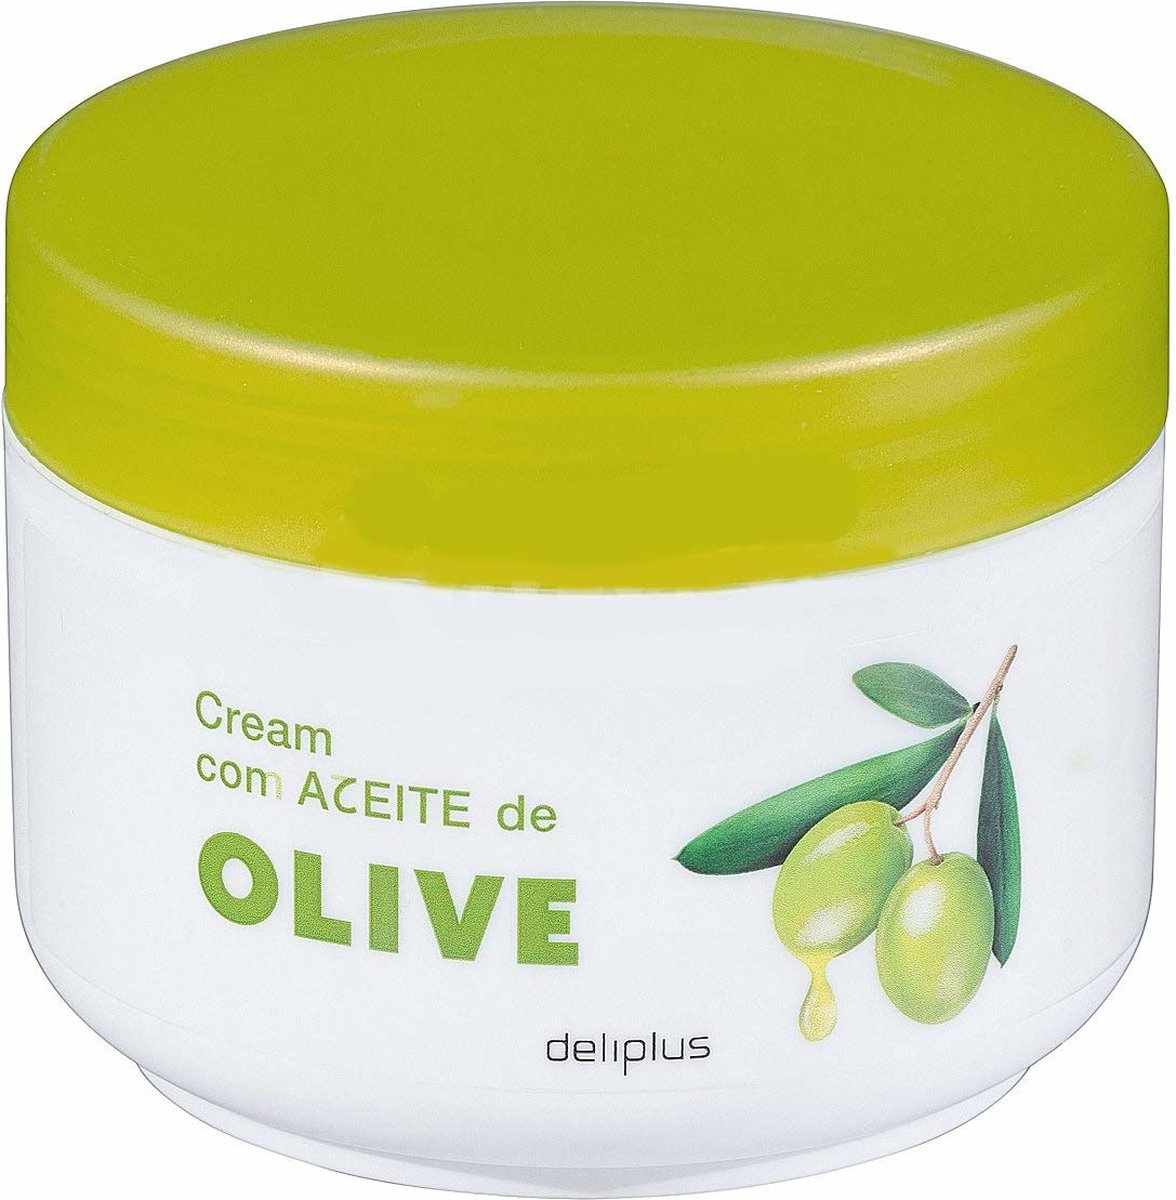 DeliPlus Cream con Aceite de Oliva 250ML